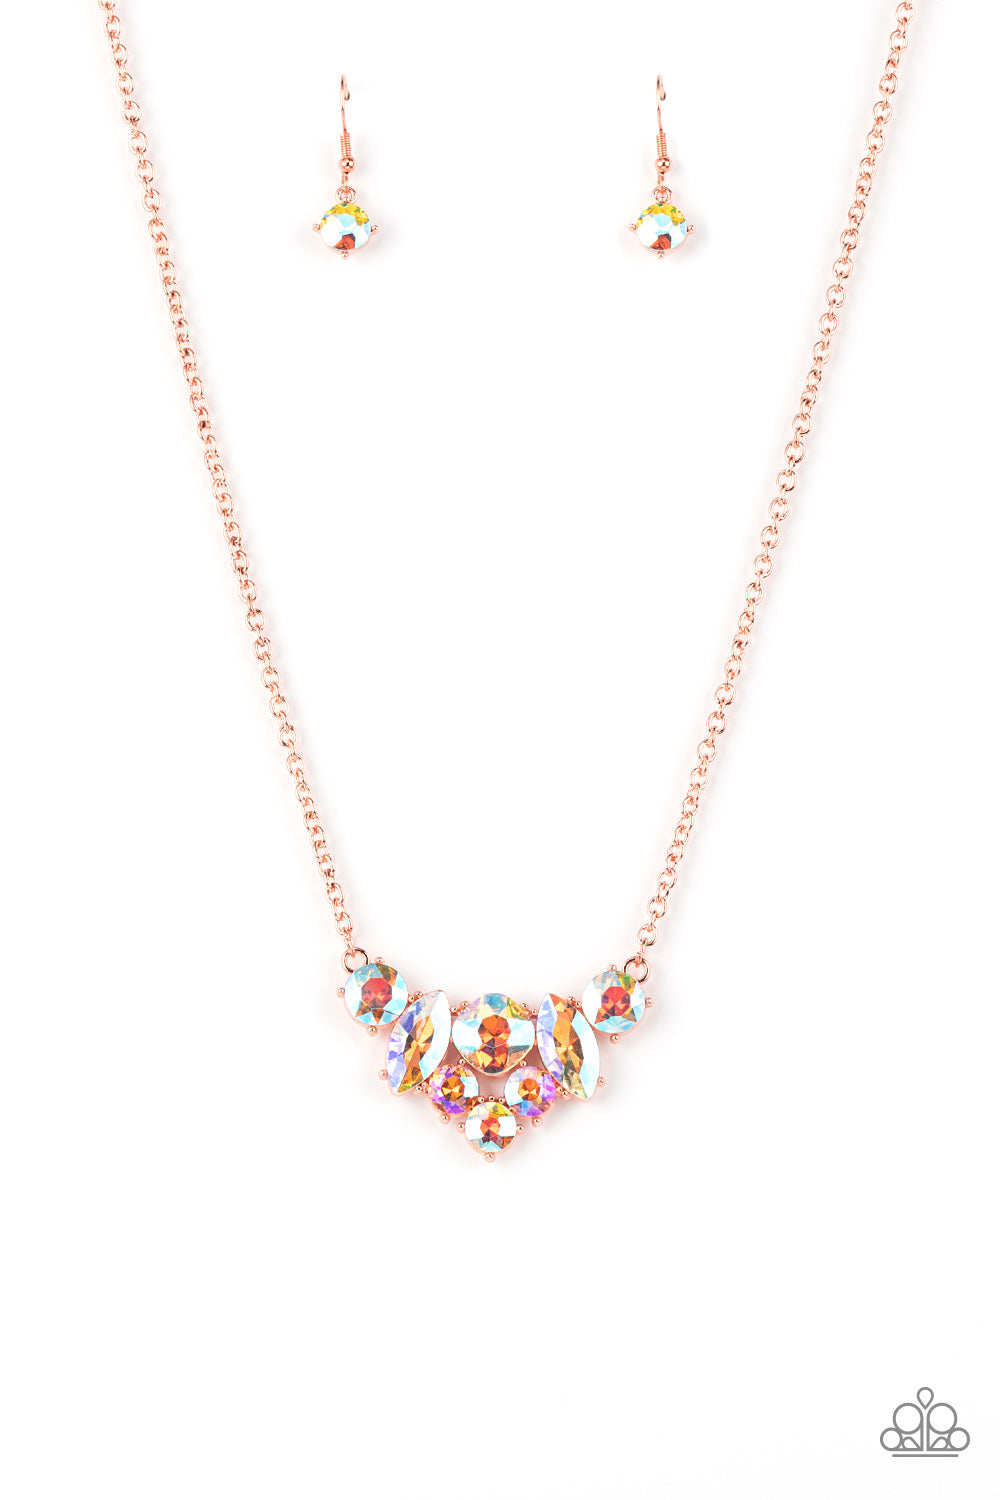 Paparazzi Accessories - Lavishly Loaded - Copper Iridescent Necklaces